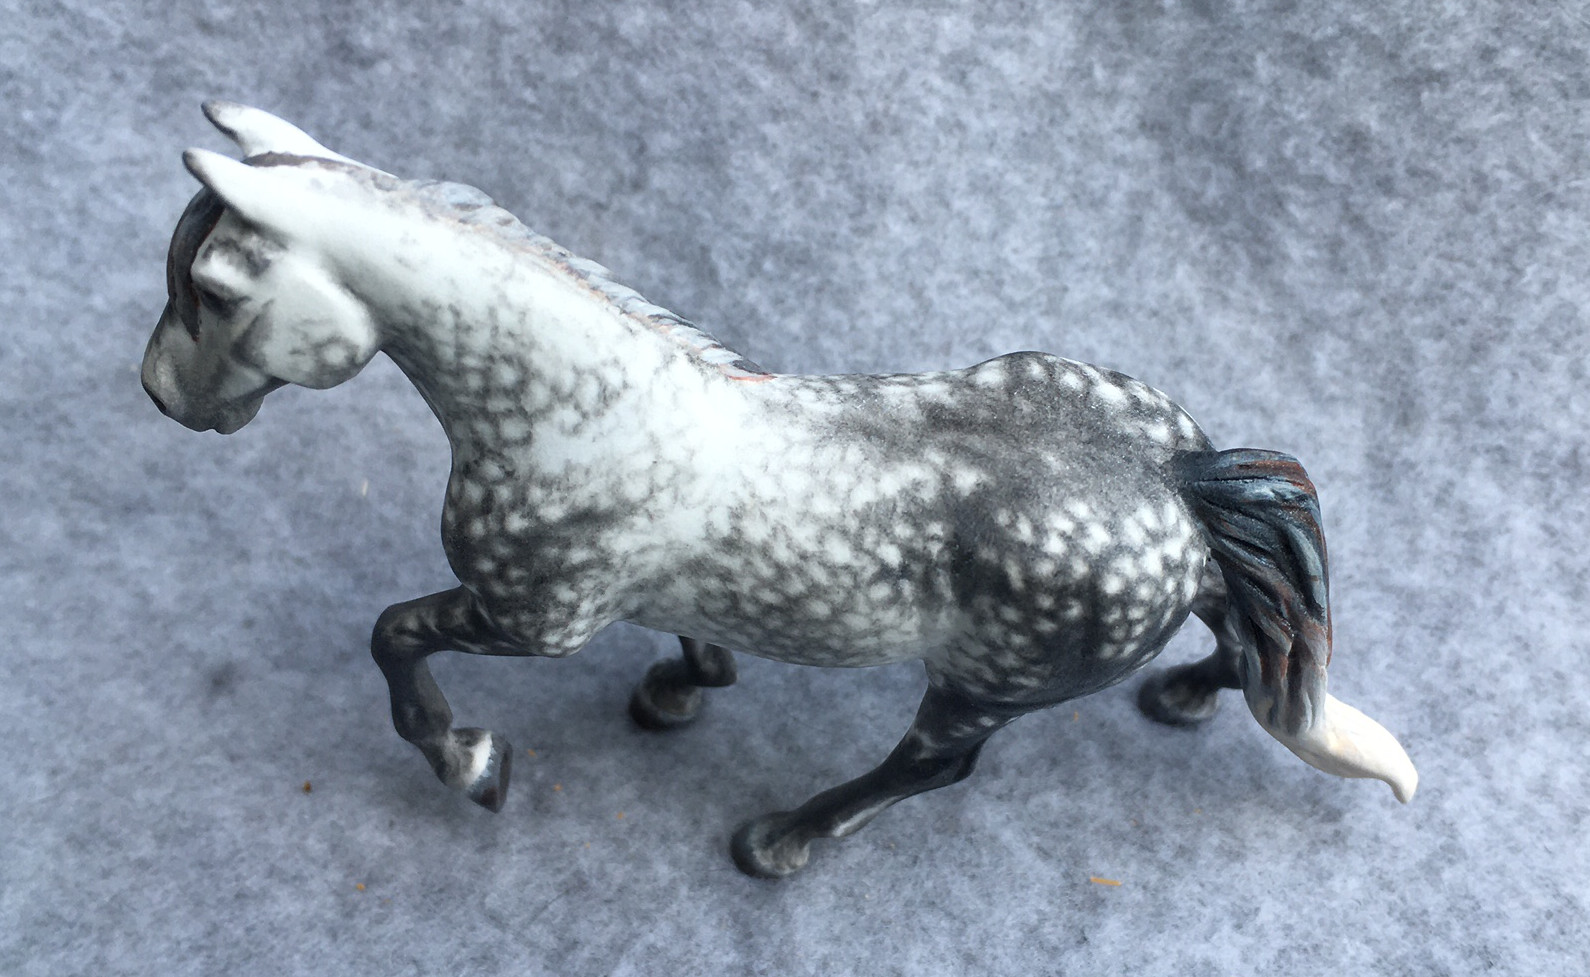 CM Breyer G3 TWH Stablemate Custom, a dapple gray gelding by Sarah Tregay, a Custom Mini/ Stablemate Model Horse 